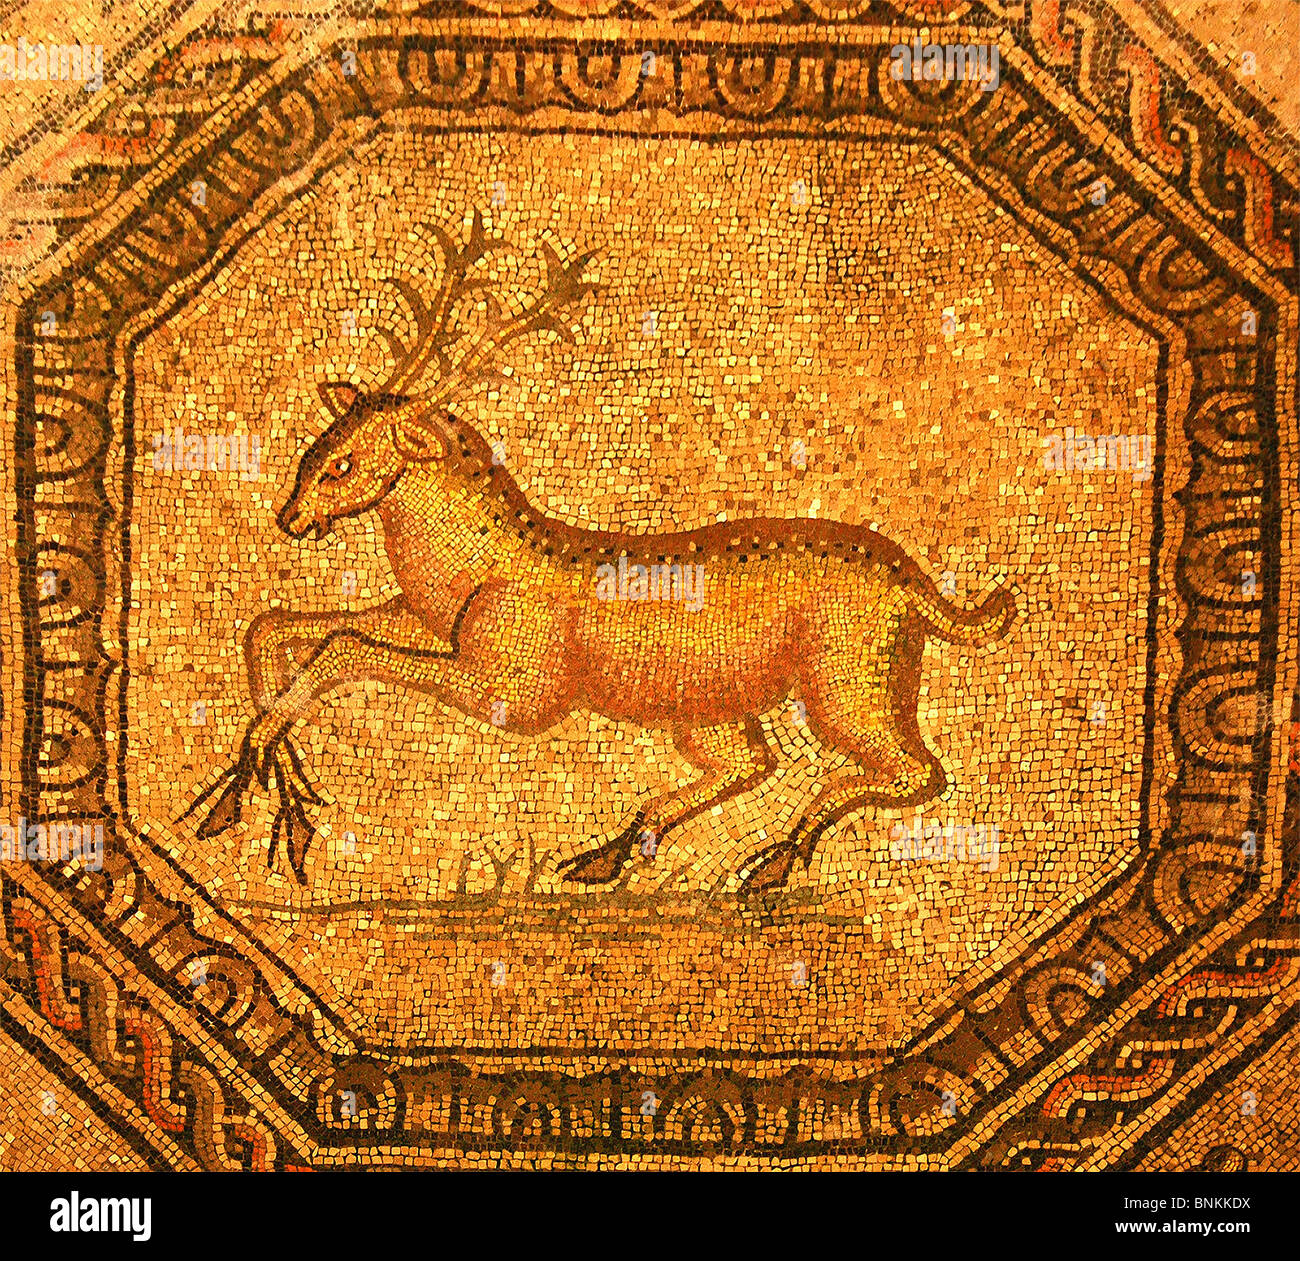 Italy Friaul Friuli aquiliea Rome Roman art skill mosaic tiles ocher red classically decoration adornment craft history story Stock Photo